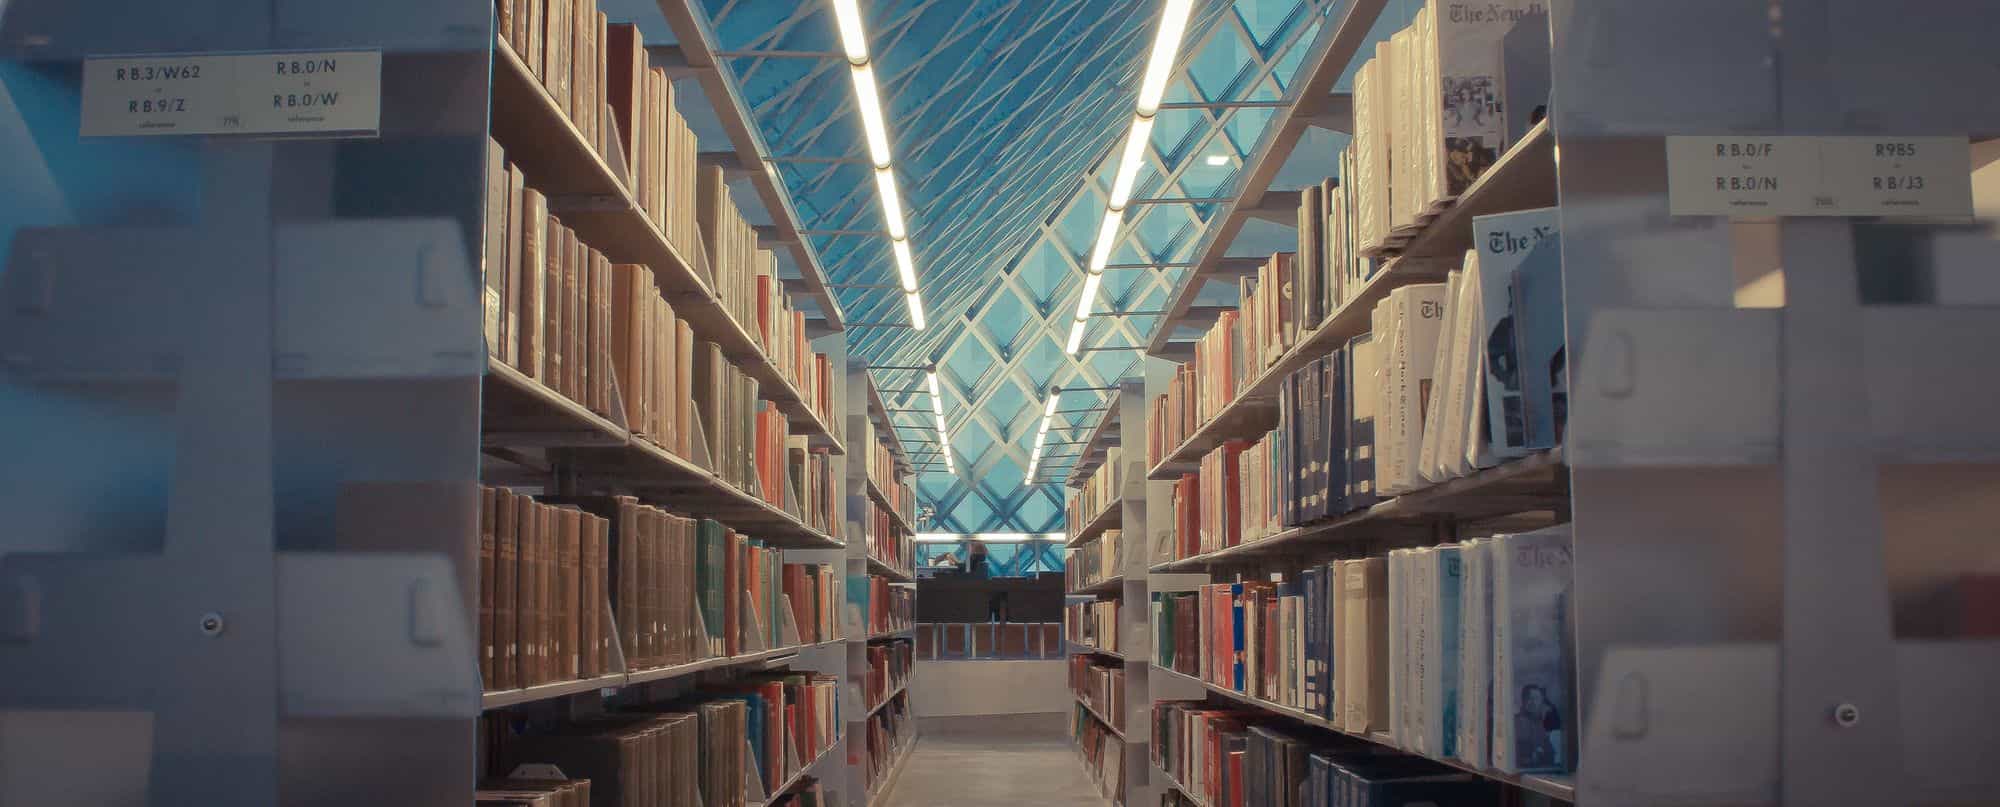 Seattle Public Library, Seattle, Washington, USA